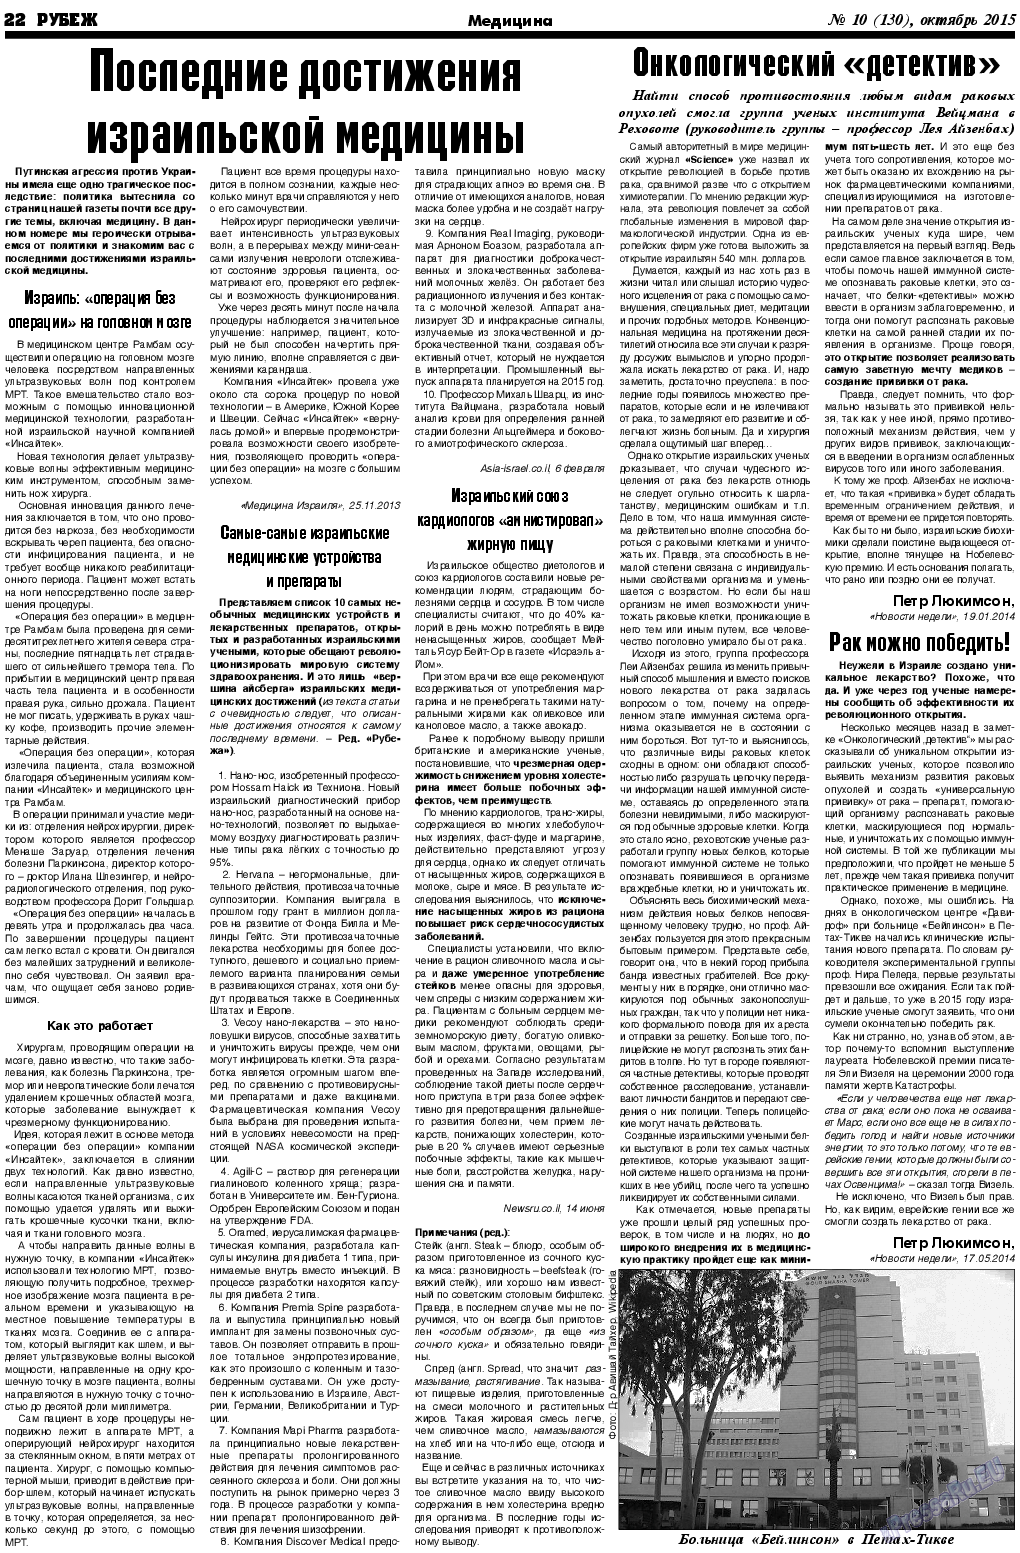 Рубеж, газета. 2015 №10 стр.22